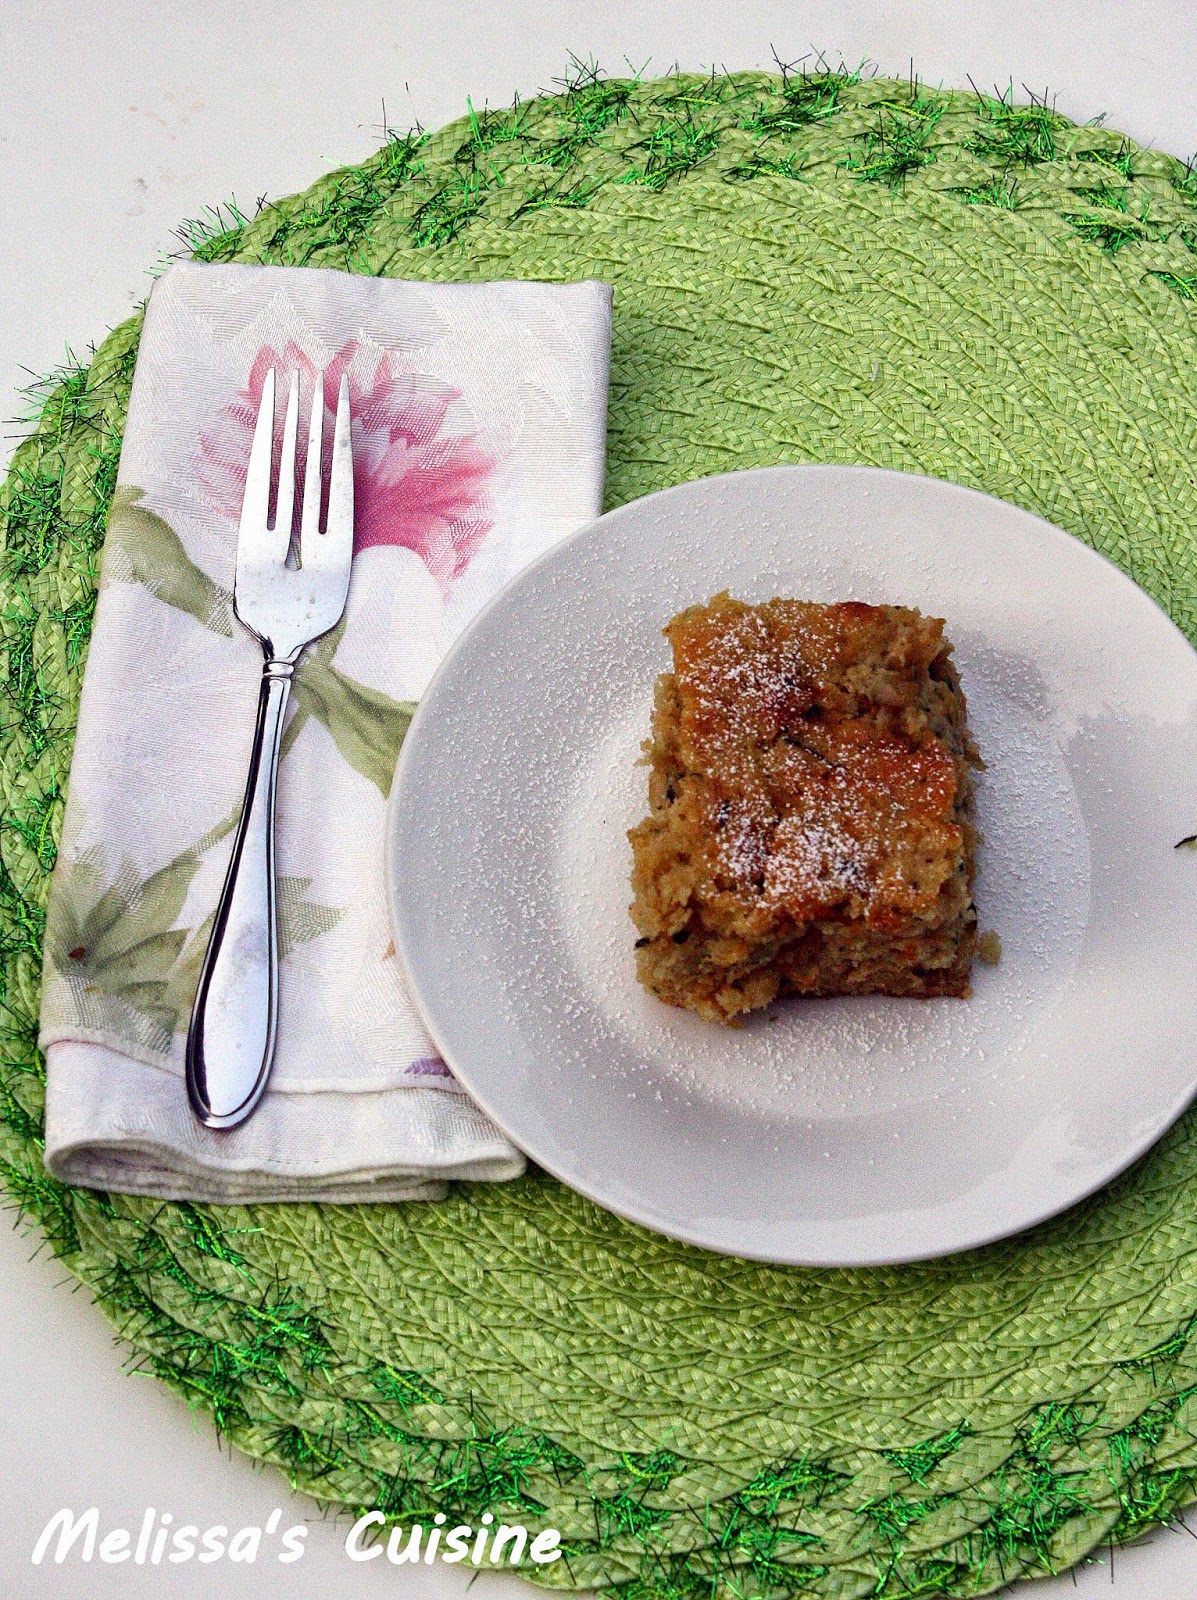 Melissa's Cuisine: Zucchini Cake